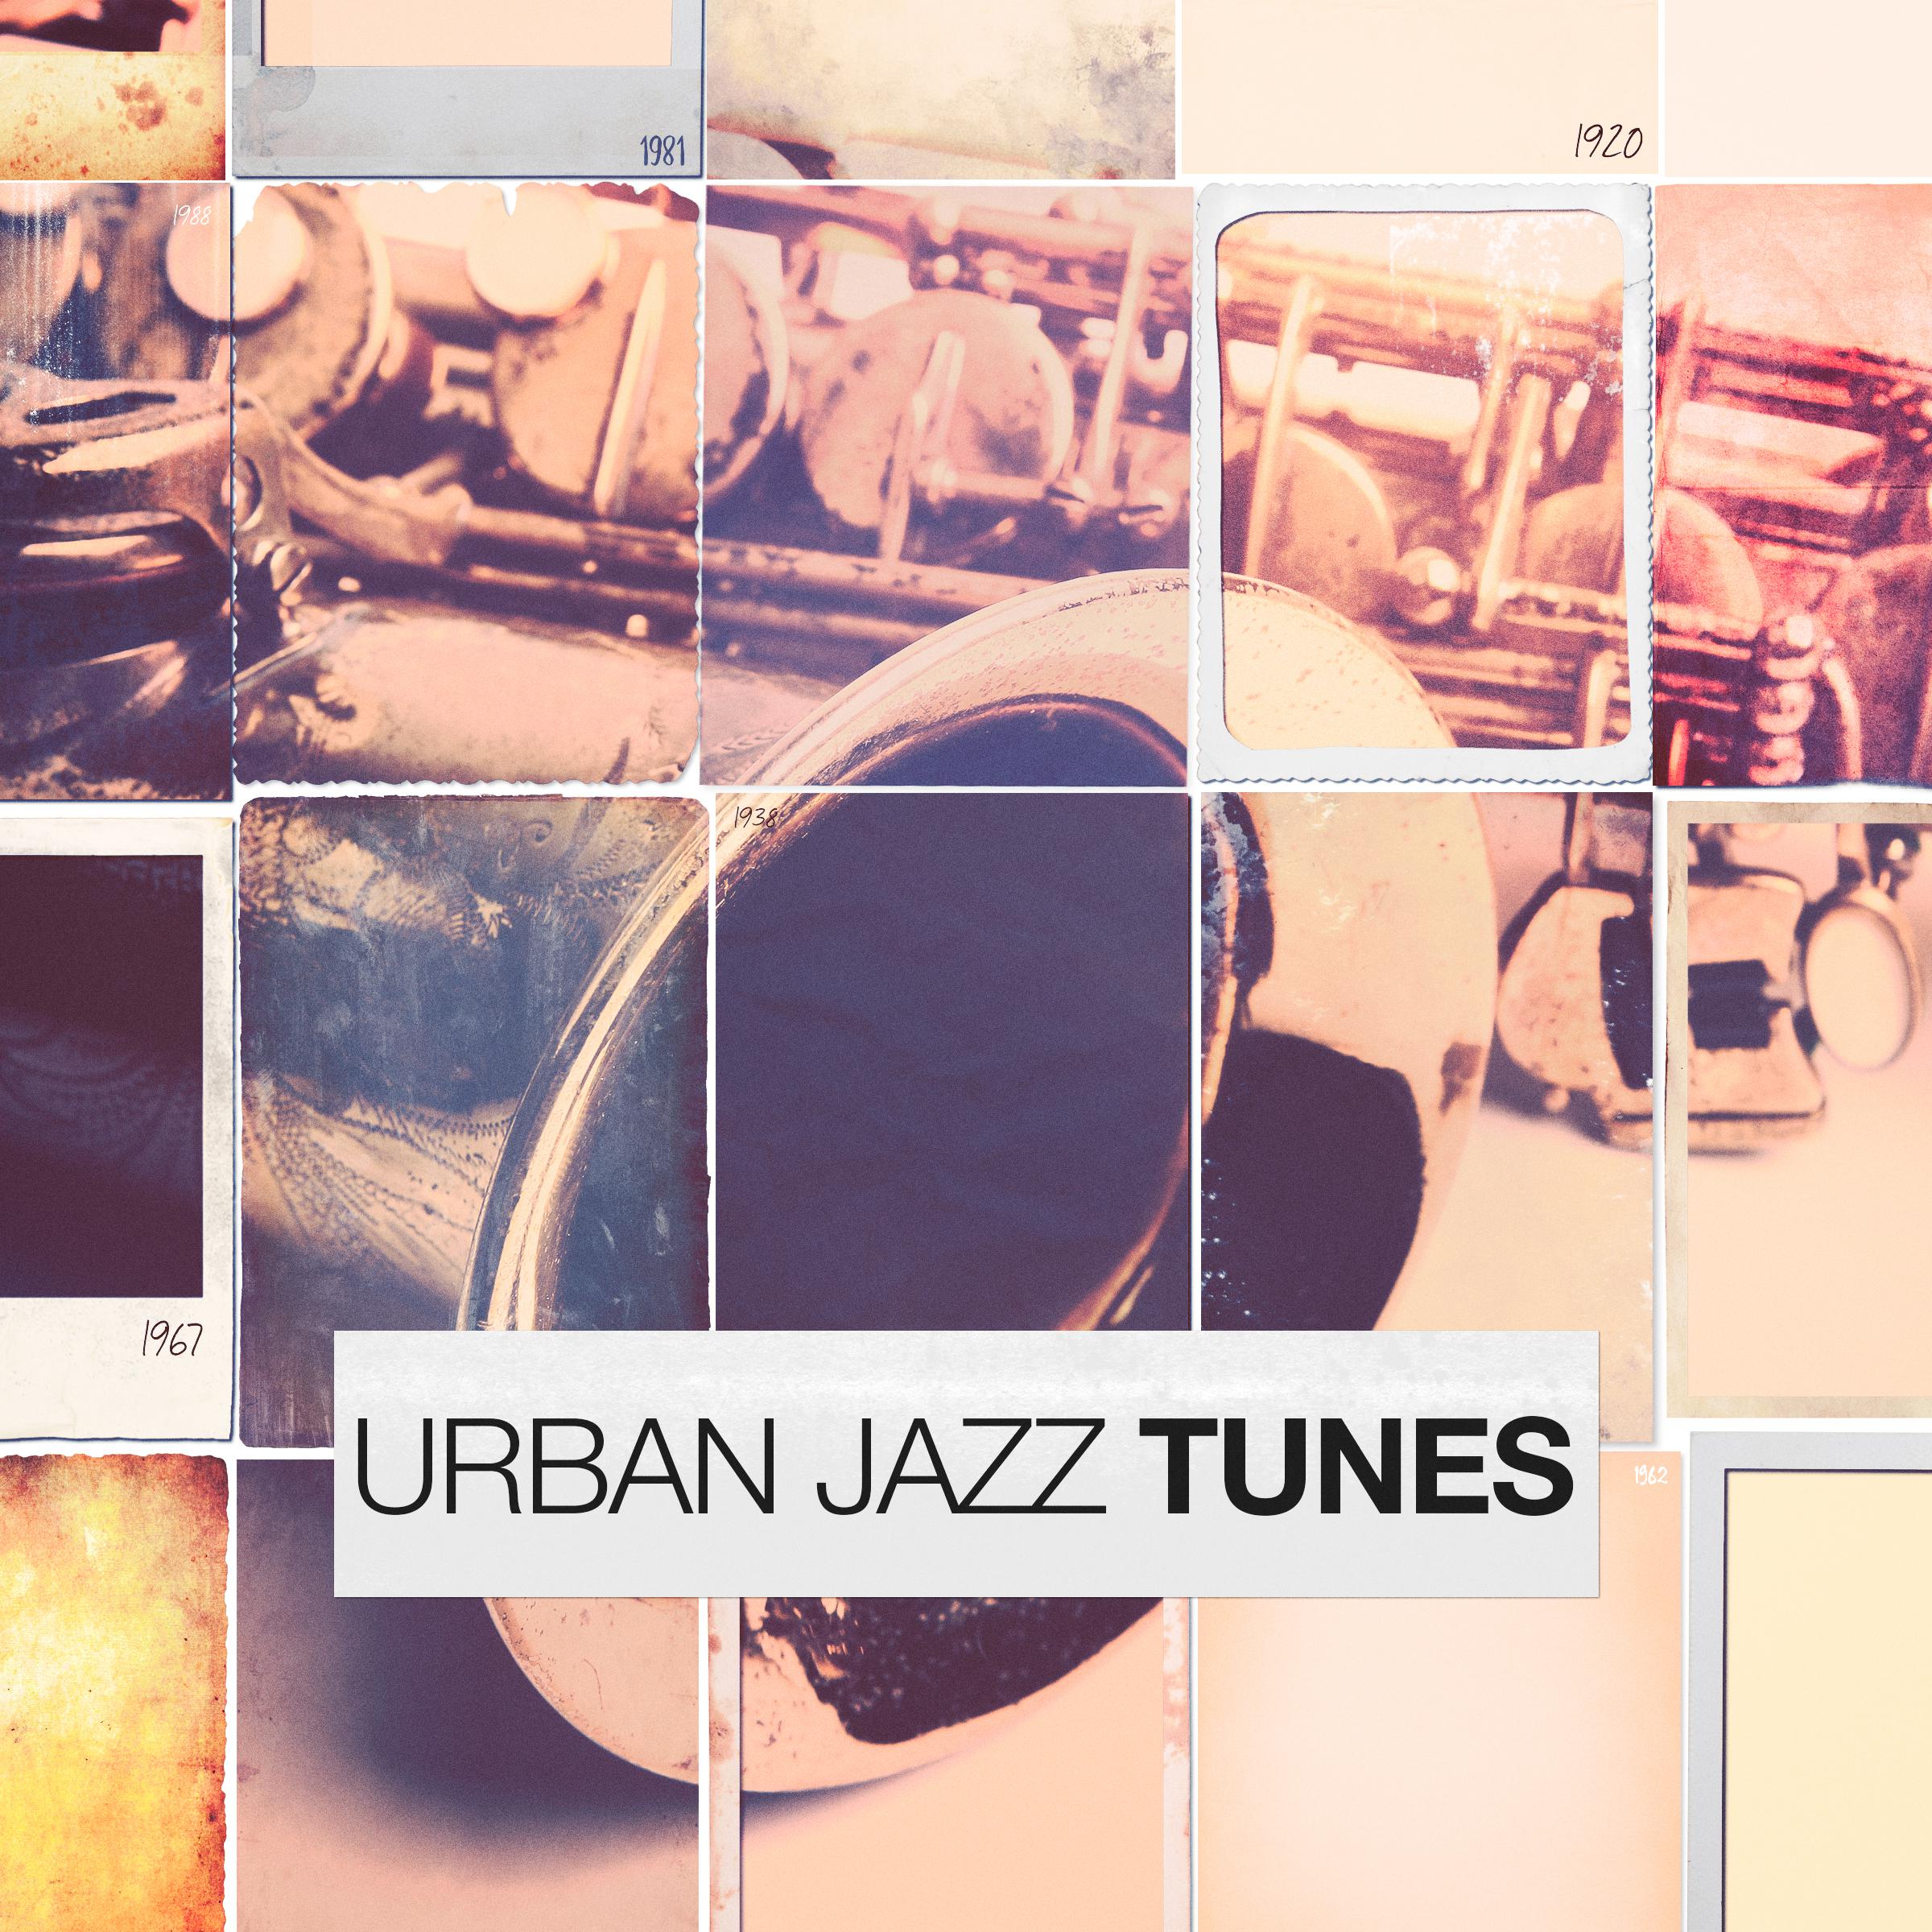 Urban Jazz Tunes